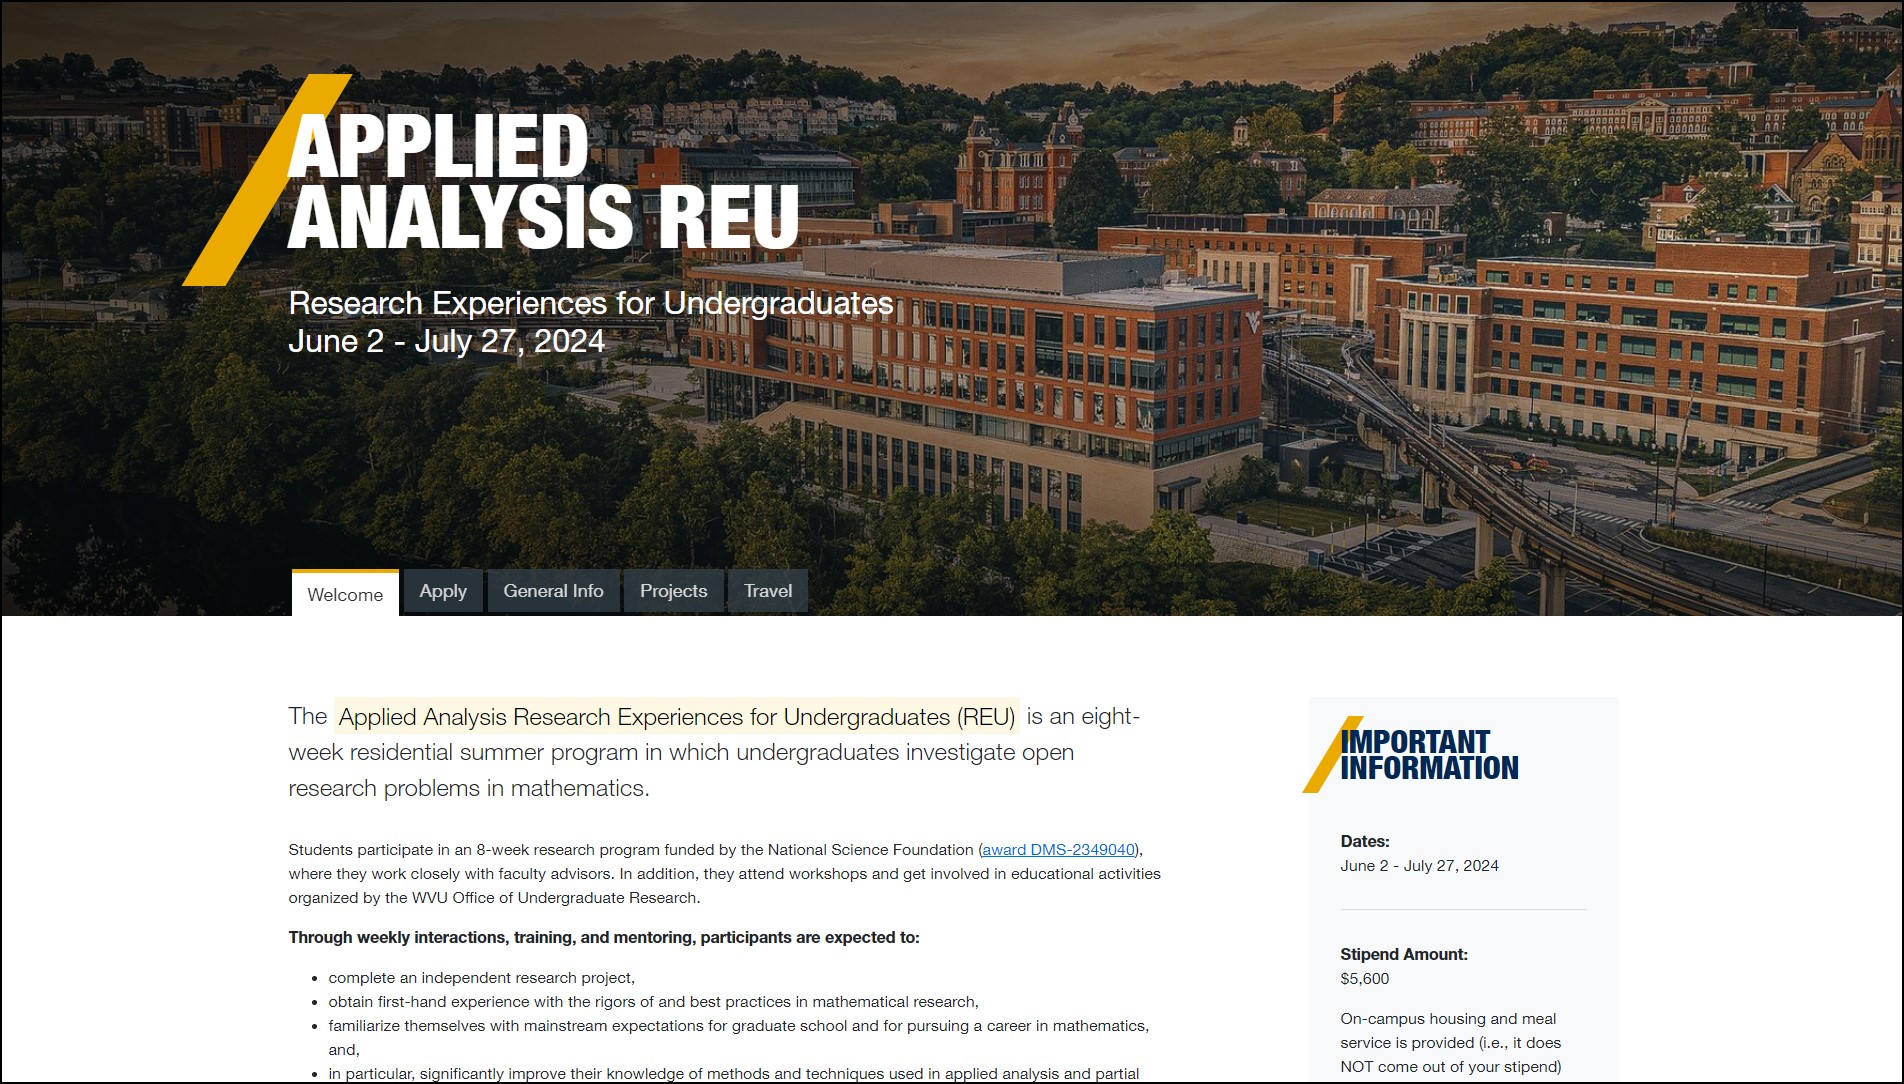 Applied Analysis REU at West Virginia University